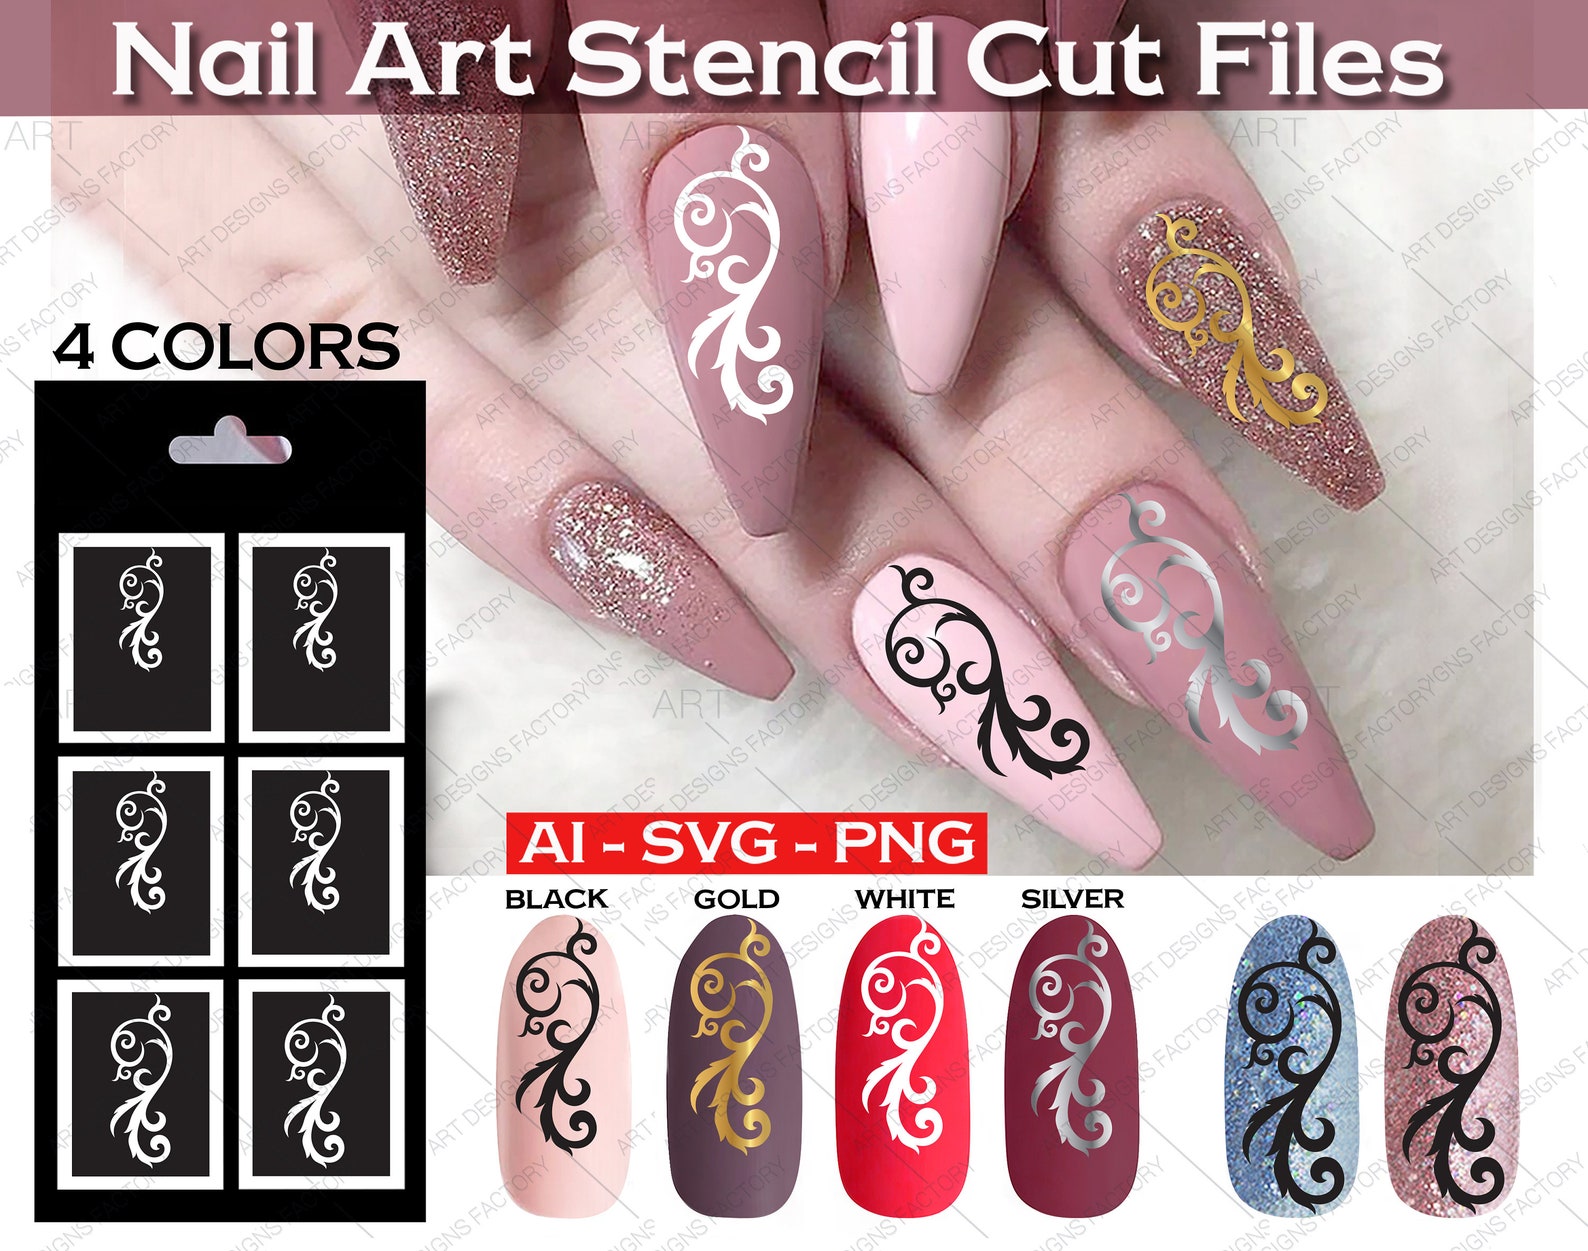 4. Nail Art Stencil Stickers Online India - Myntra - wide 9